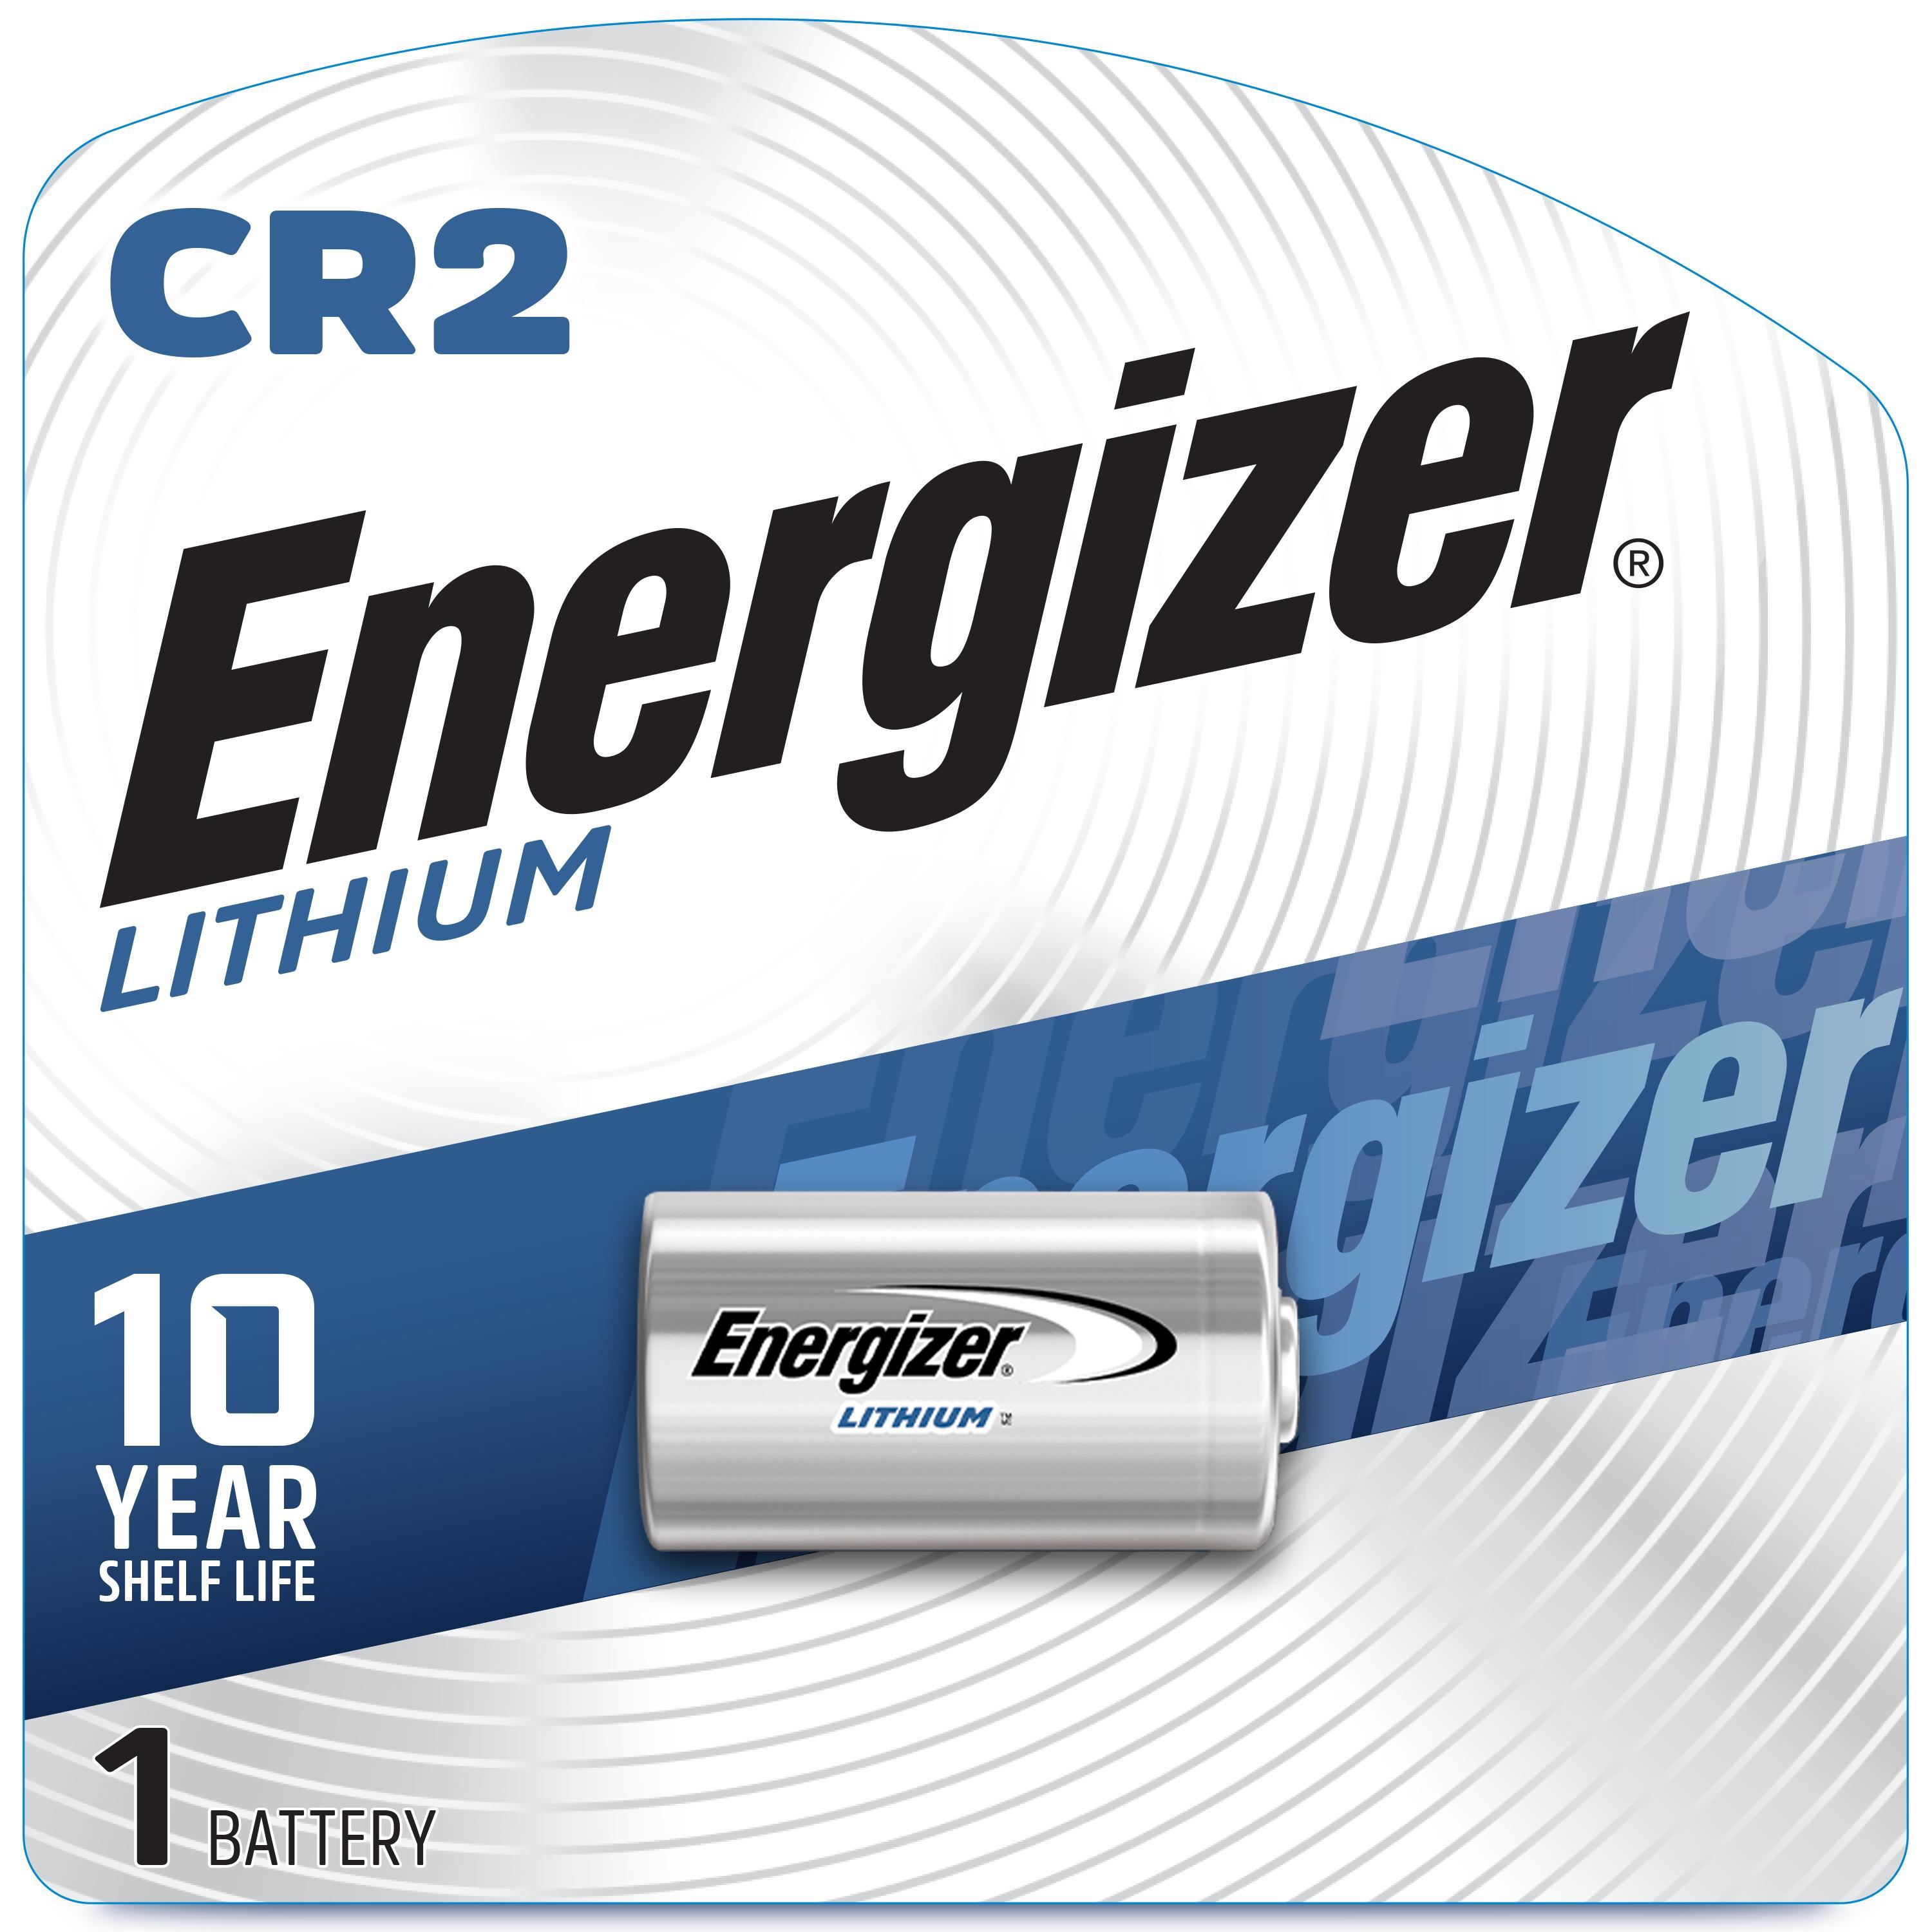 Energizer® EL123APBP Non-Rechargeable Battery, Lithium Manganese Dioxide (Li/MnO2), 3 V Nominal, 1500 mAh Nominal, 123